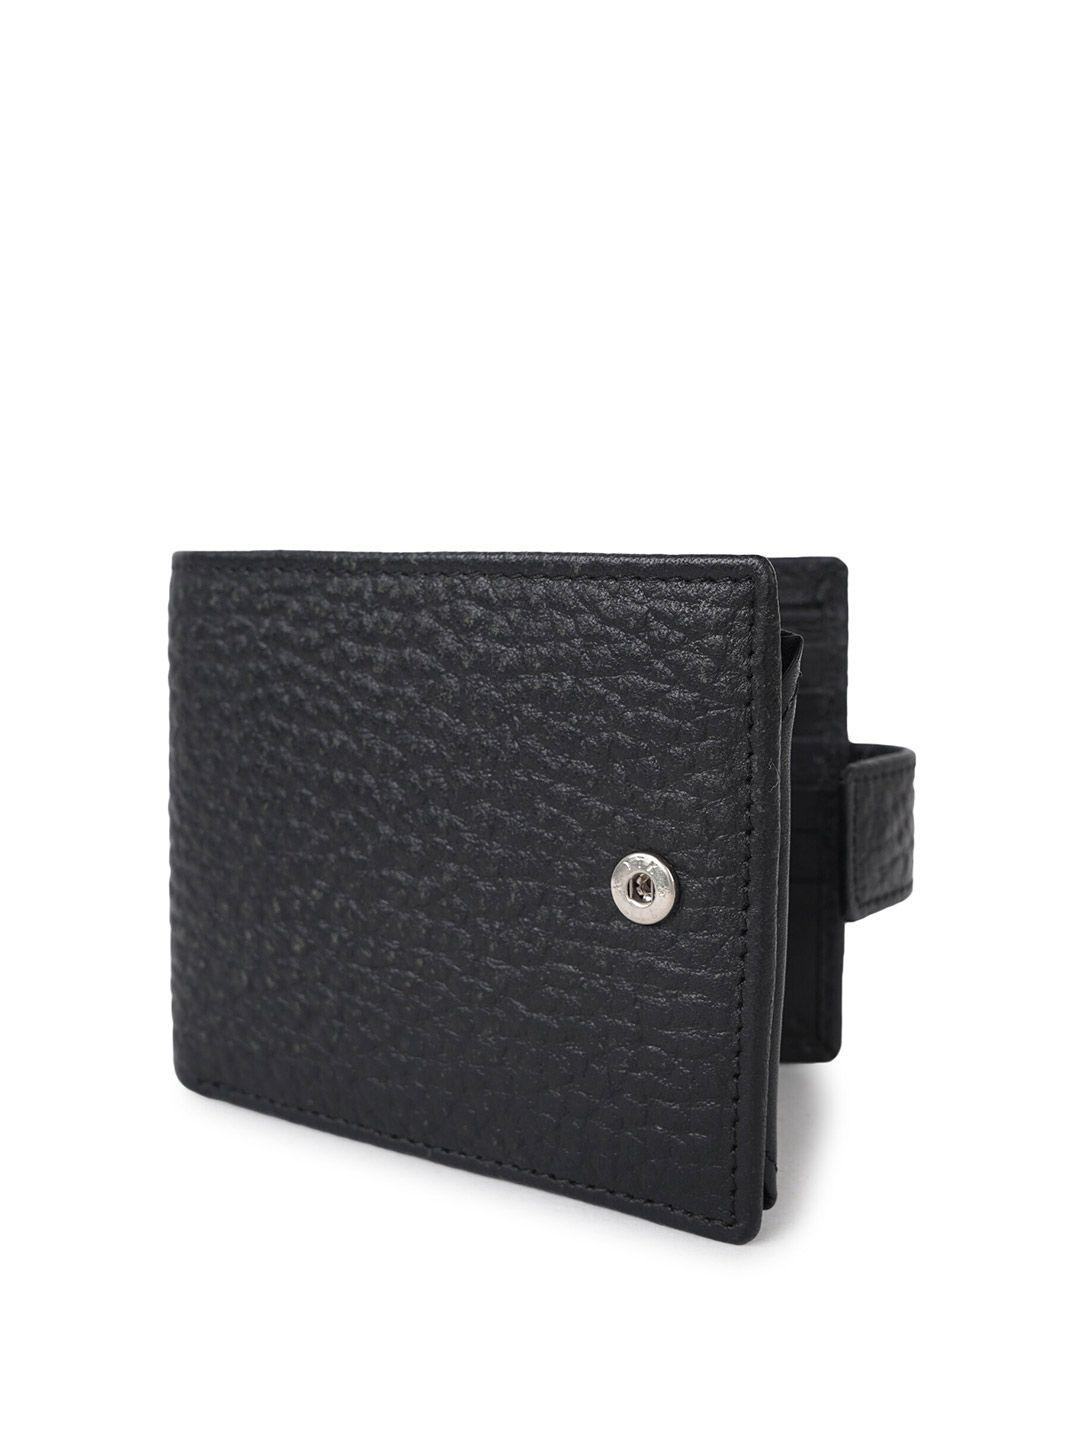 cimoni textured leather two fold wallet